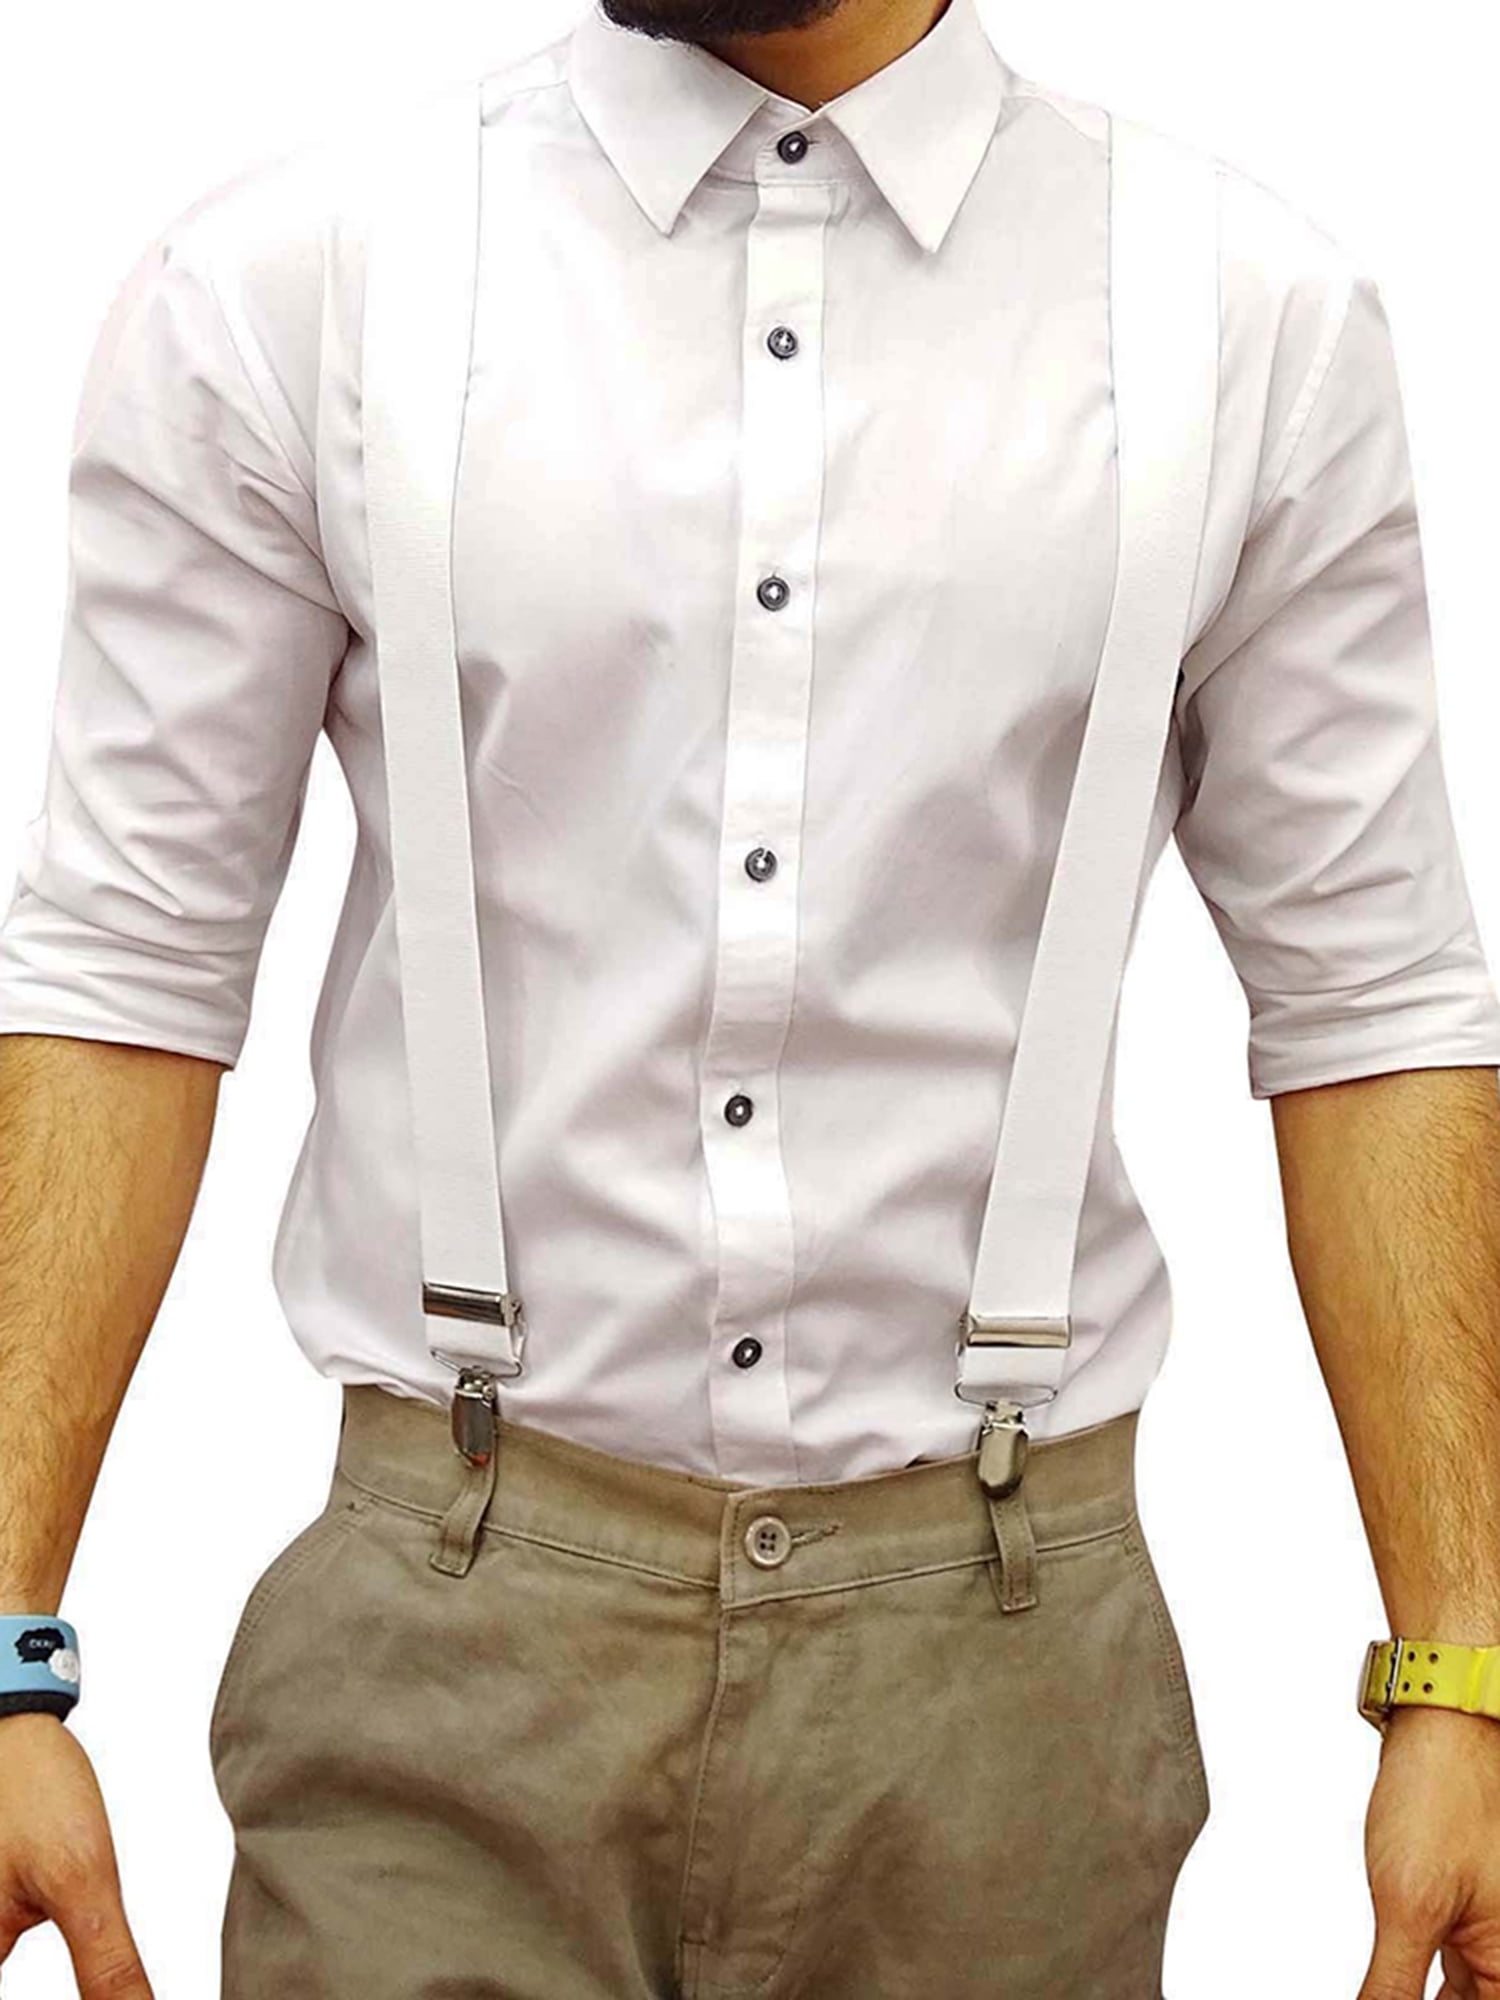 Suspenders for Men Adjustable Mens Suspenders with Hooks Heavy Duty Big and Tall Braces Groomsmen 